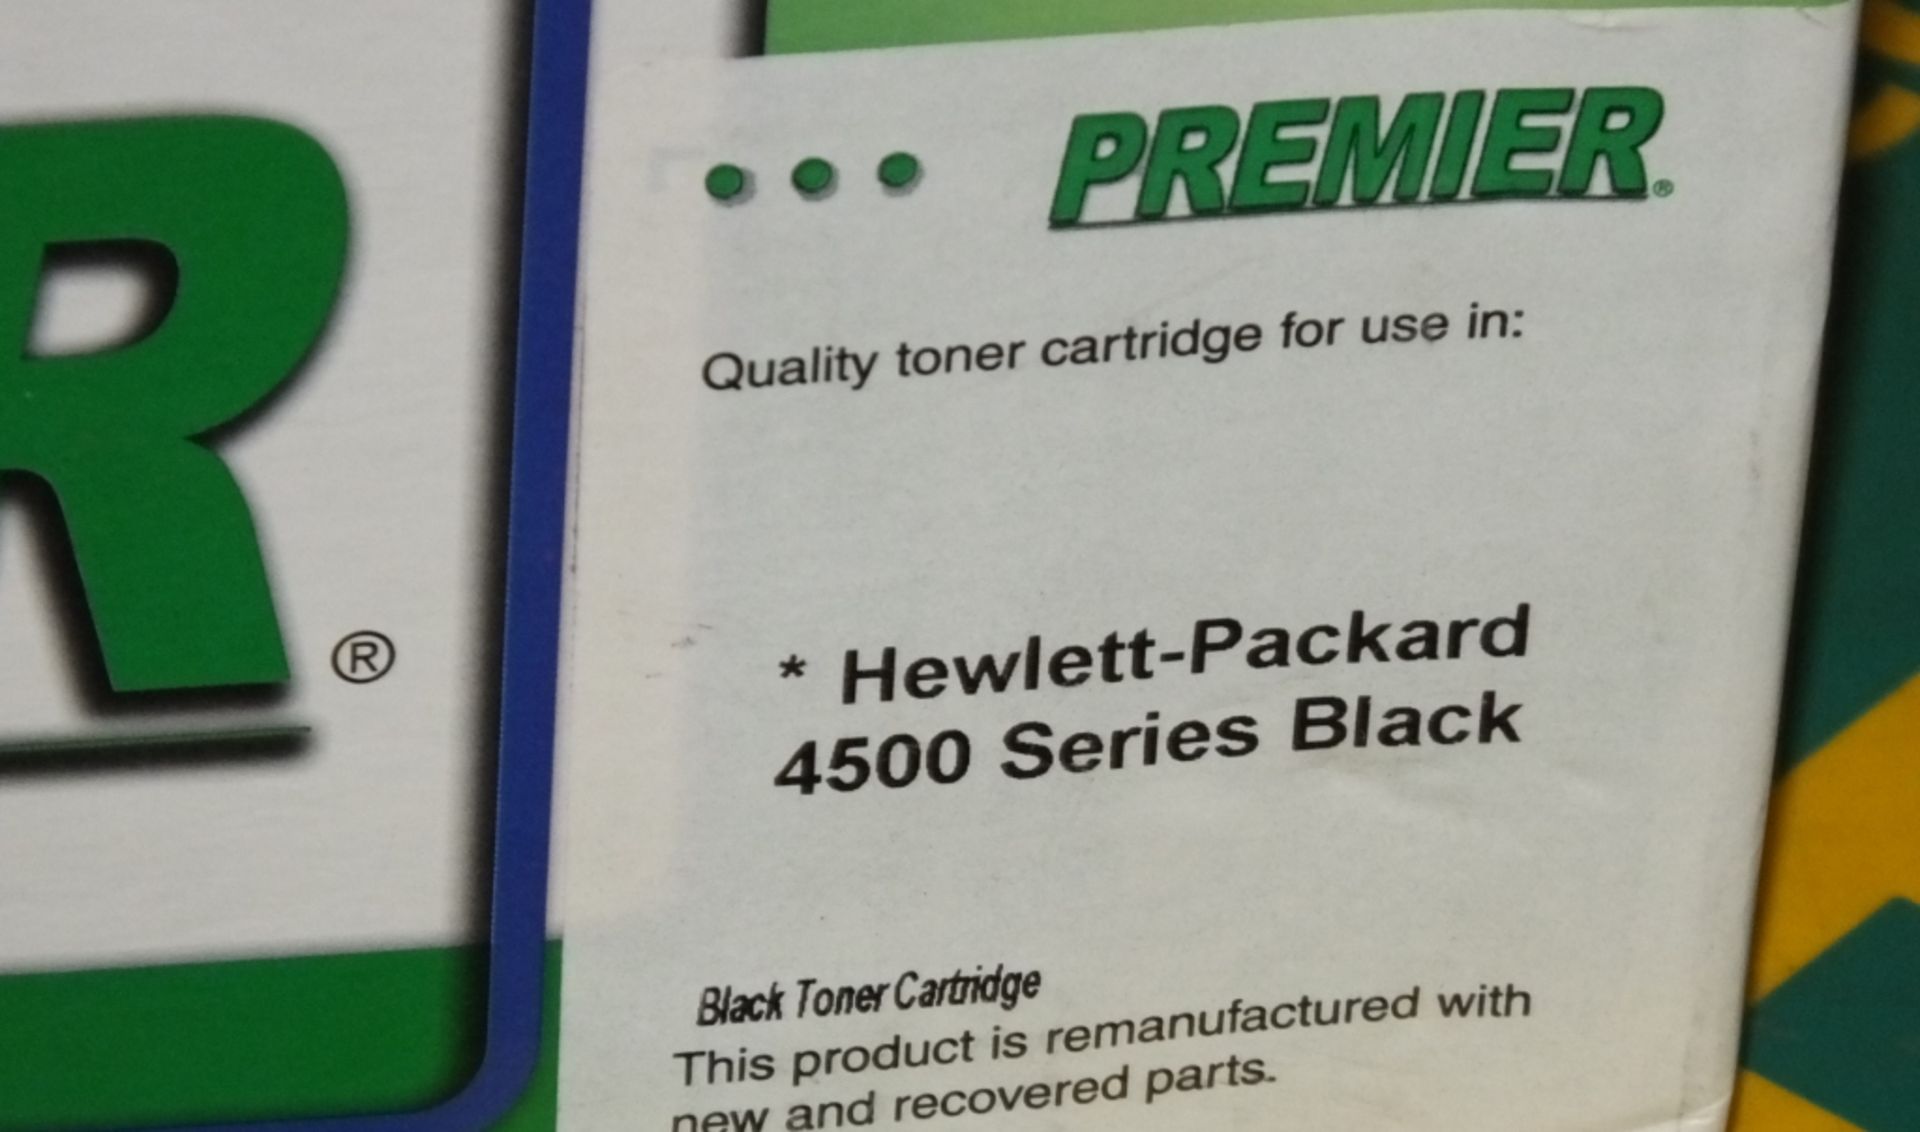 Pacific Ink toner cartridge 93A magenta, Premier (HP Compatible) 4500 series black toner c - Image 4 of 5